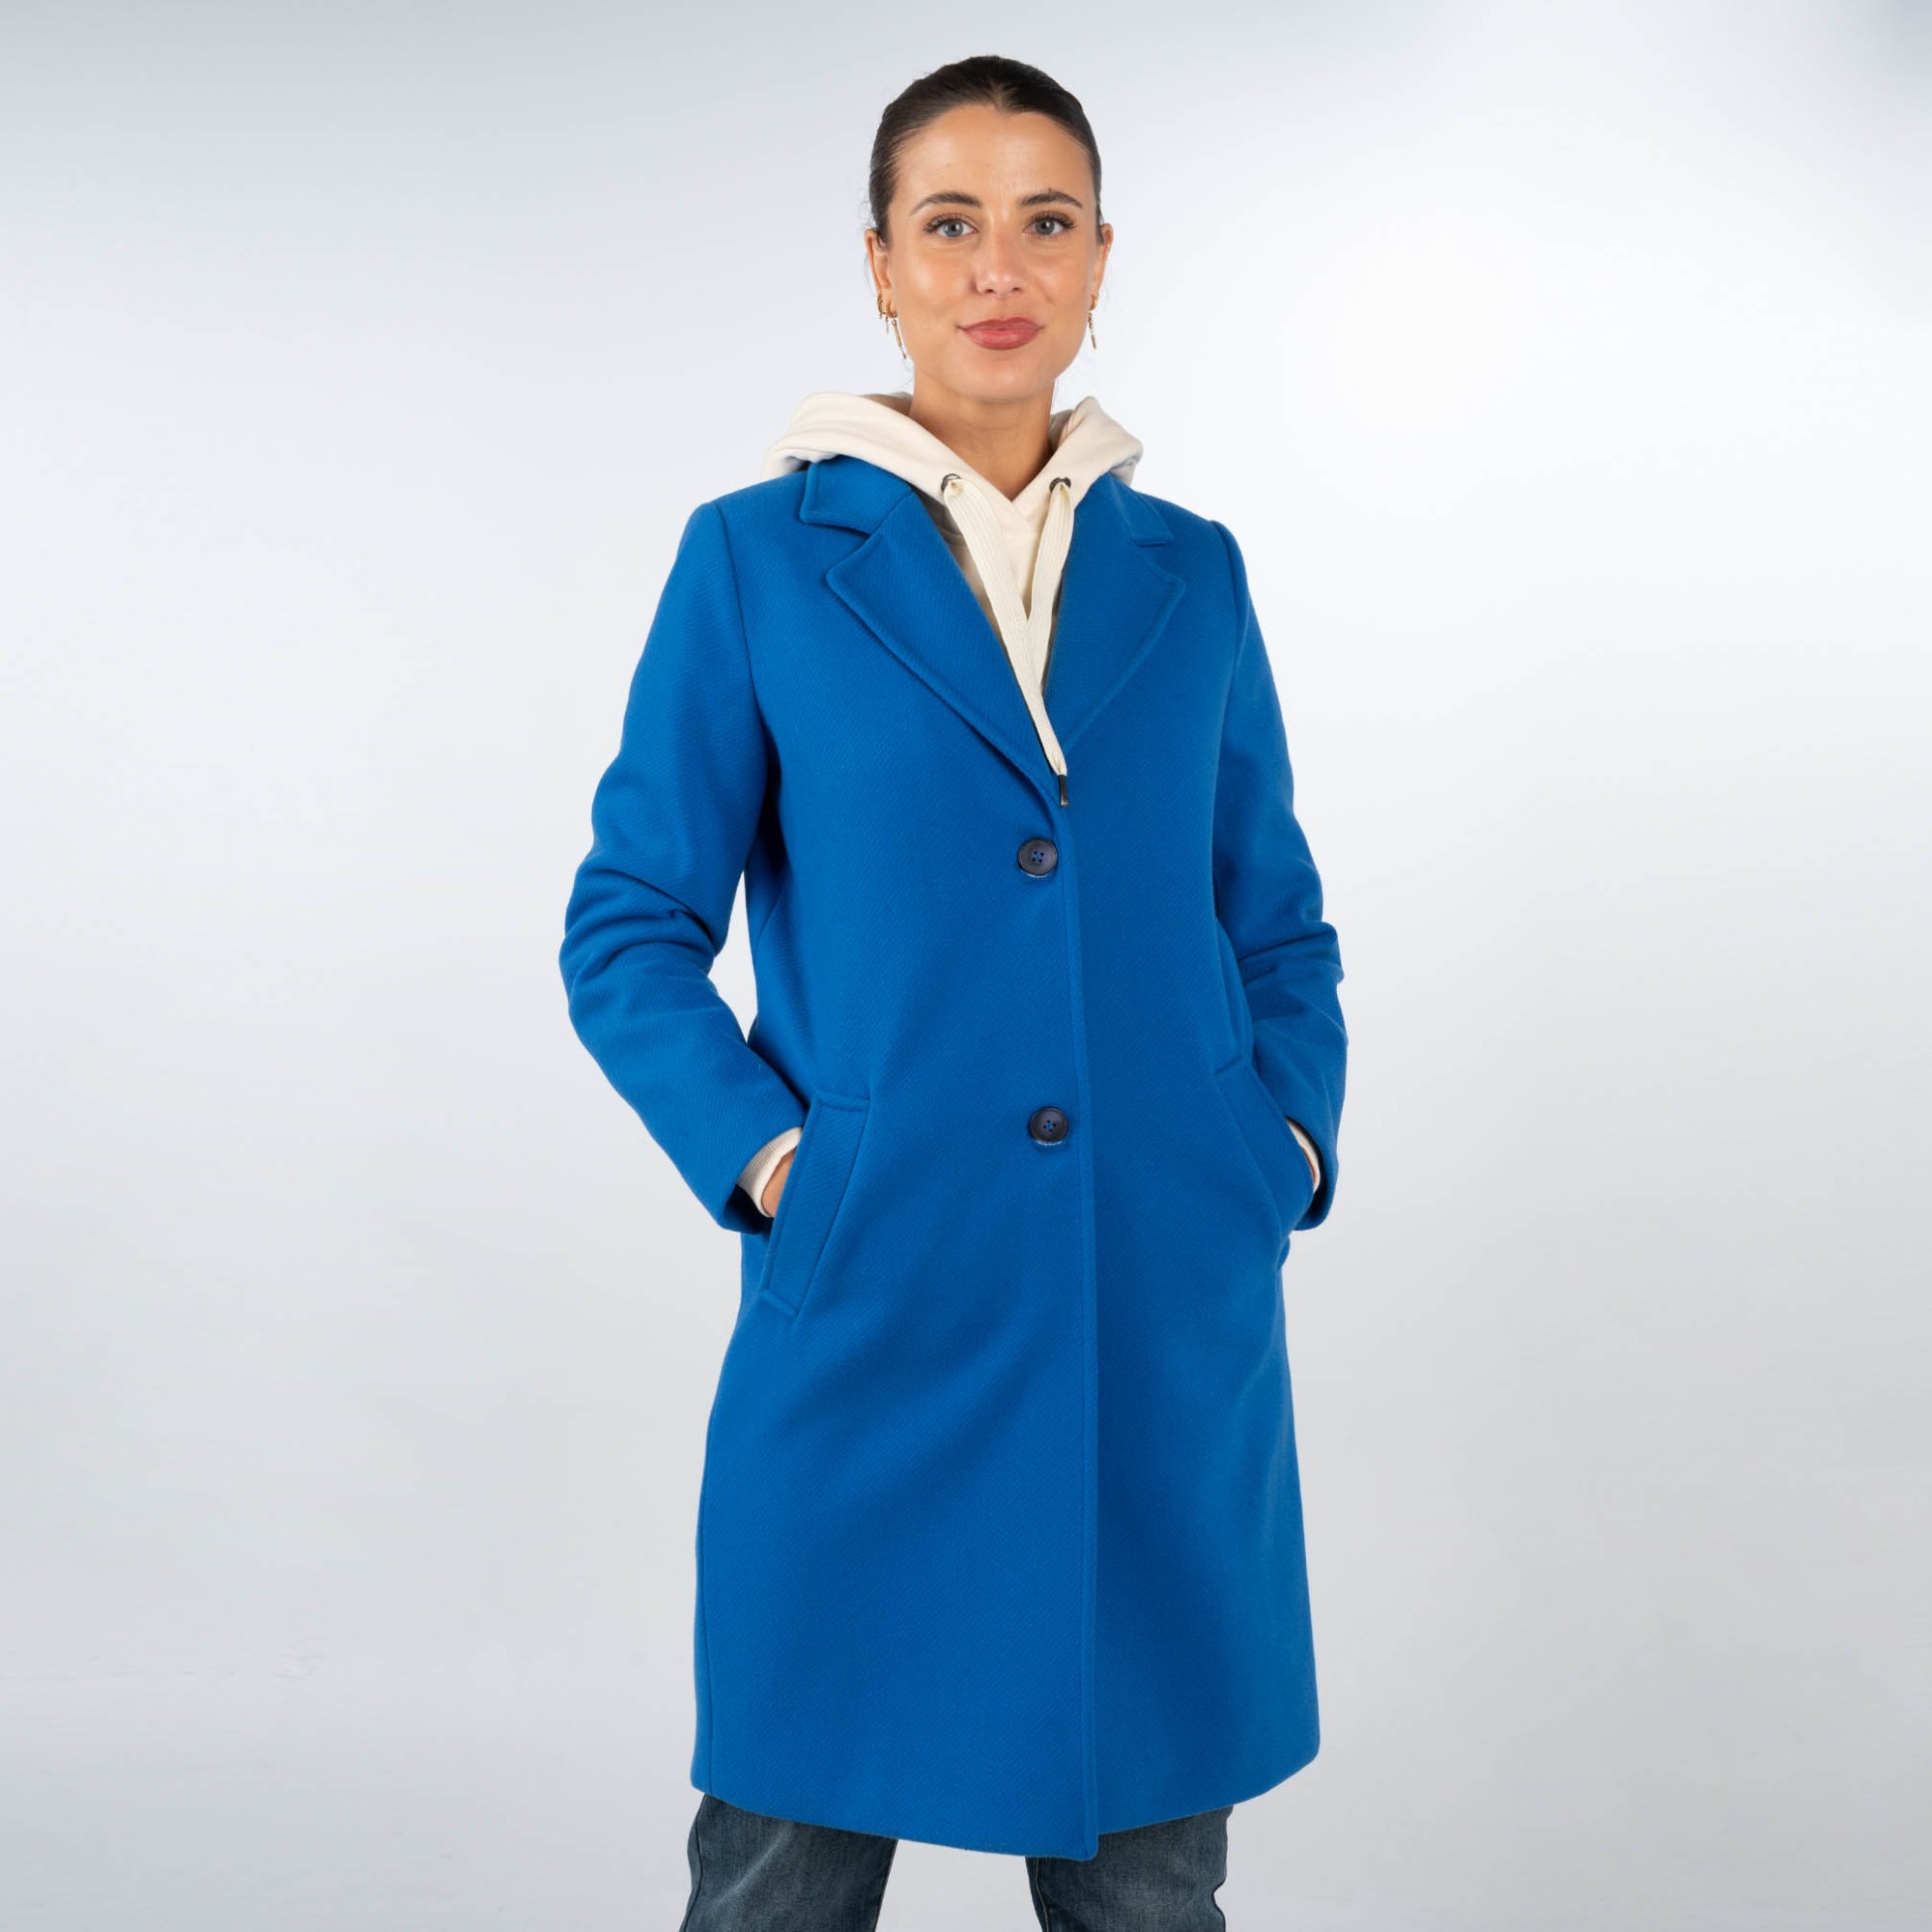 Mantel aus Hopsack-Wolle mit Gürtel - Ready to Wear 1ABQVK